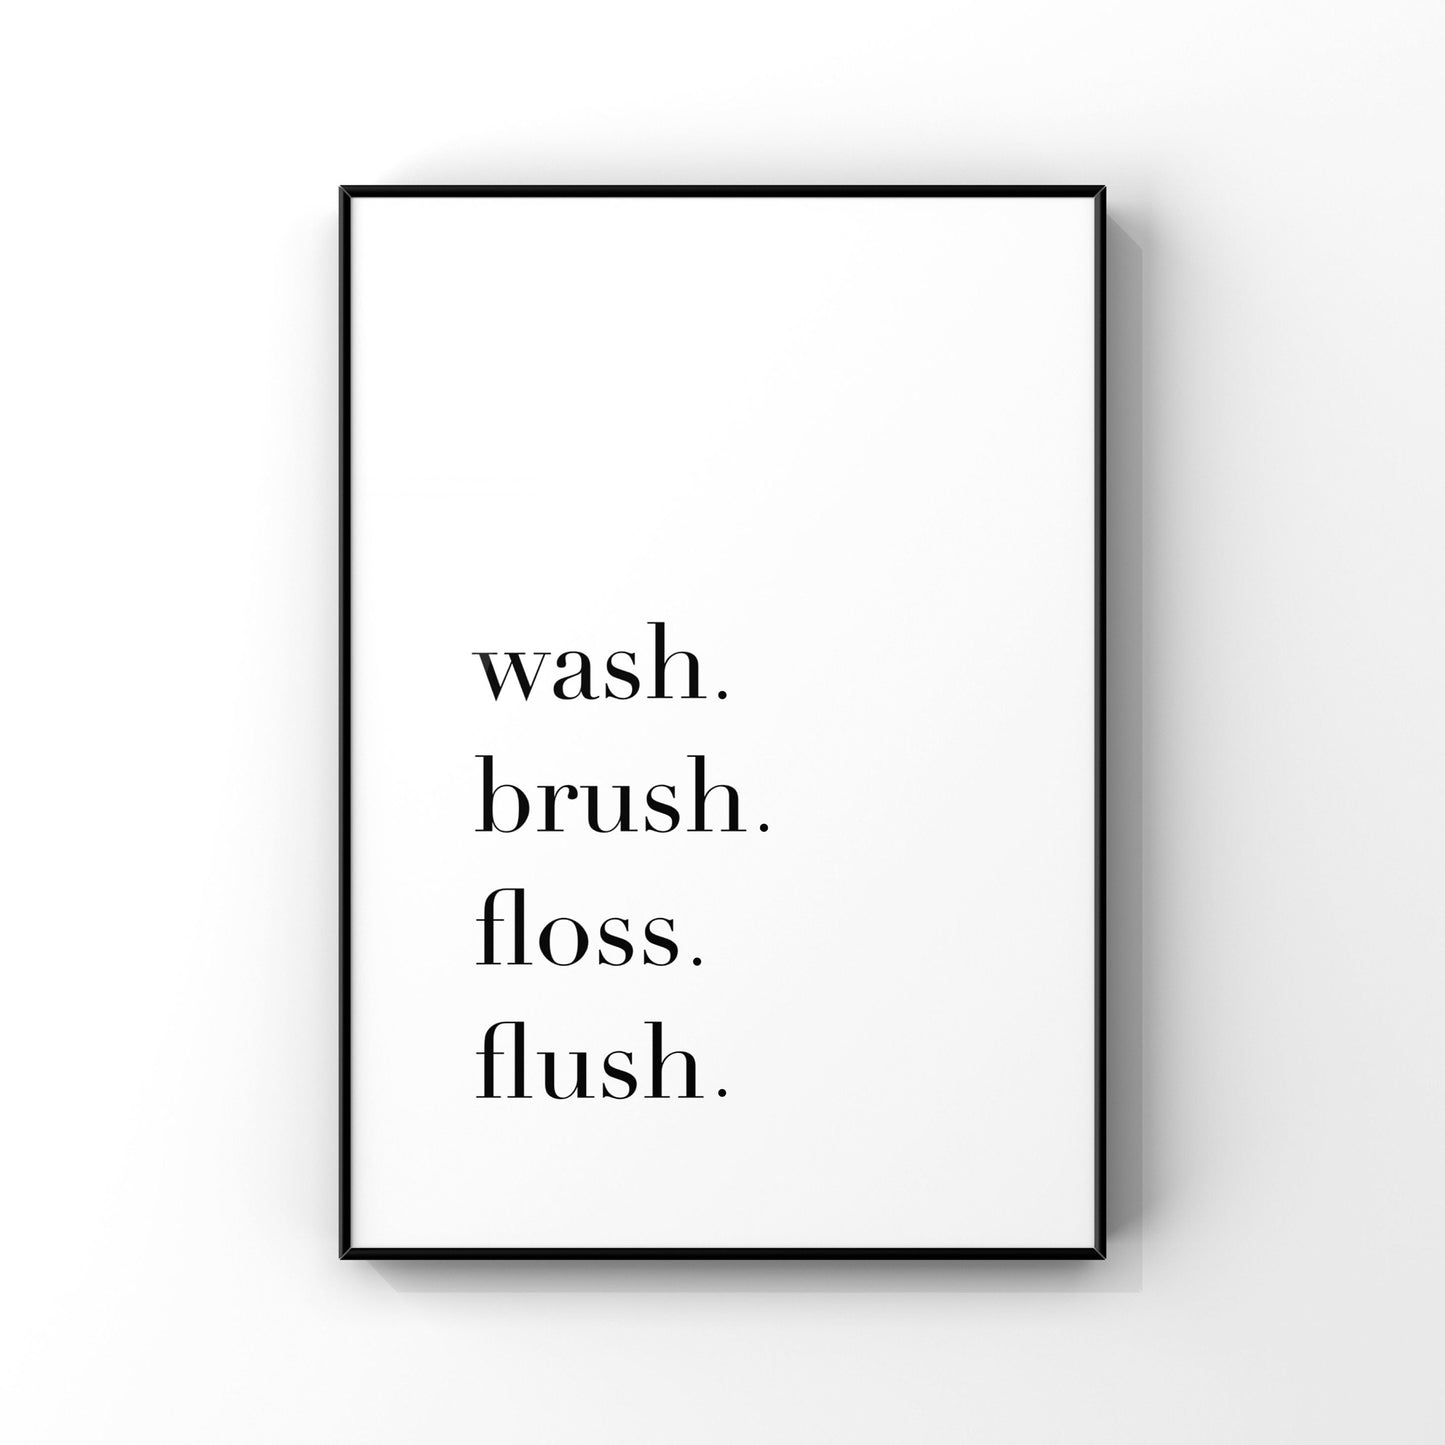 Wash brush floss flush print, Bathroom Print, Bathroom Decor, Bathroom Wall Art, Bathroom Art, Wash brush floss flush sign, Minimalist Art